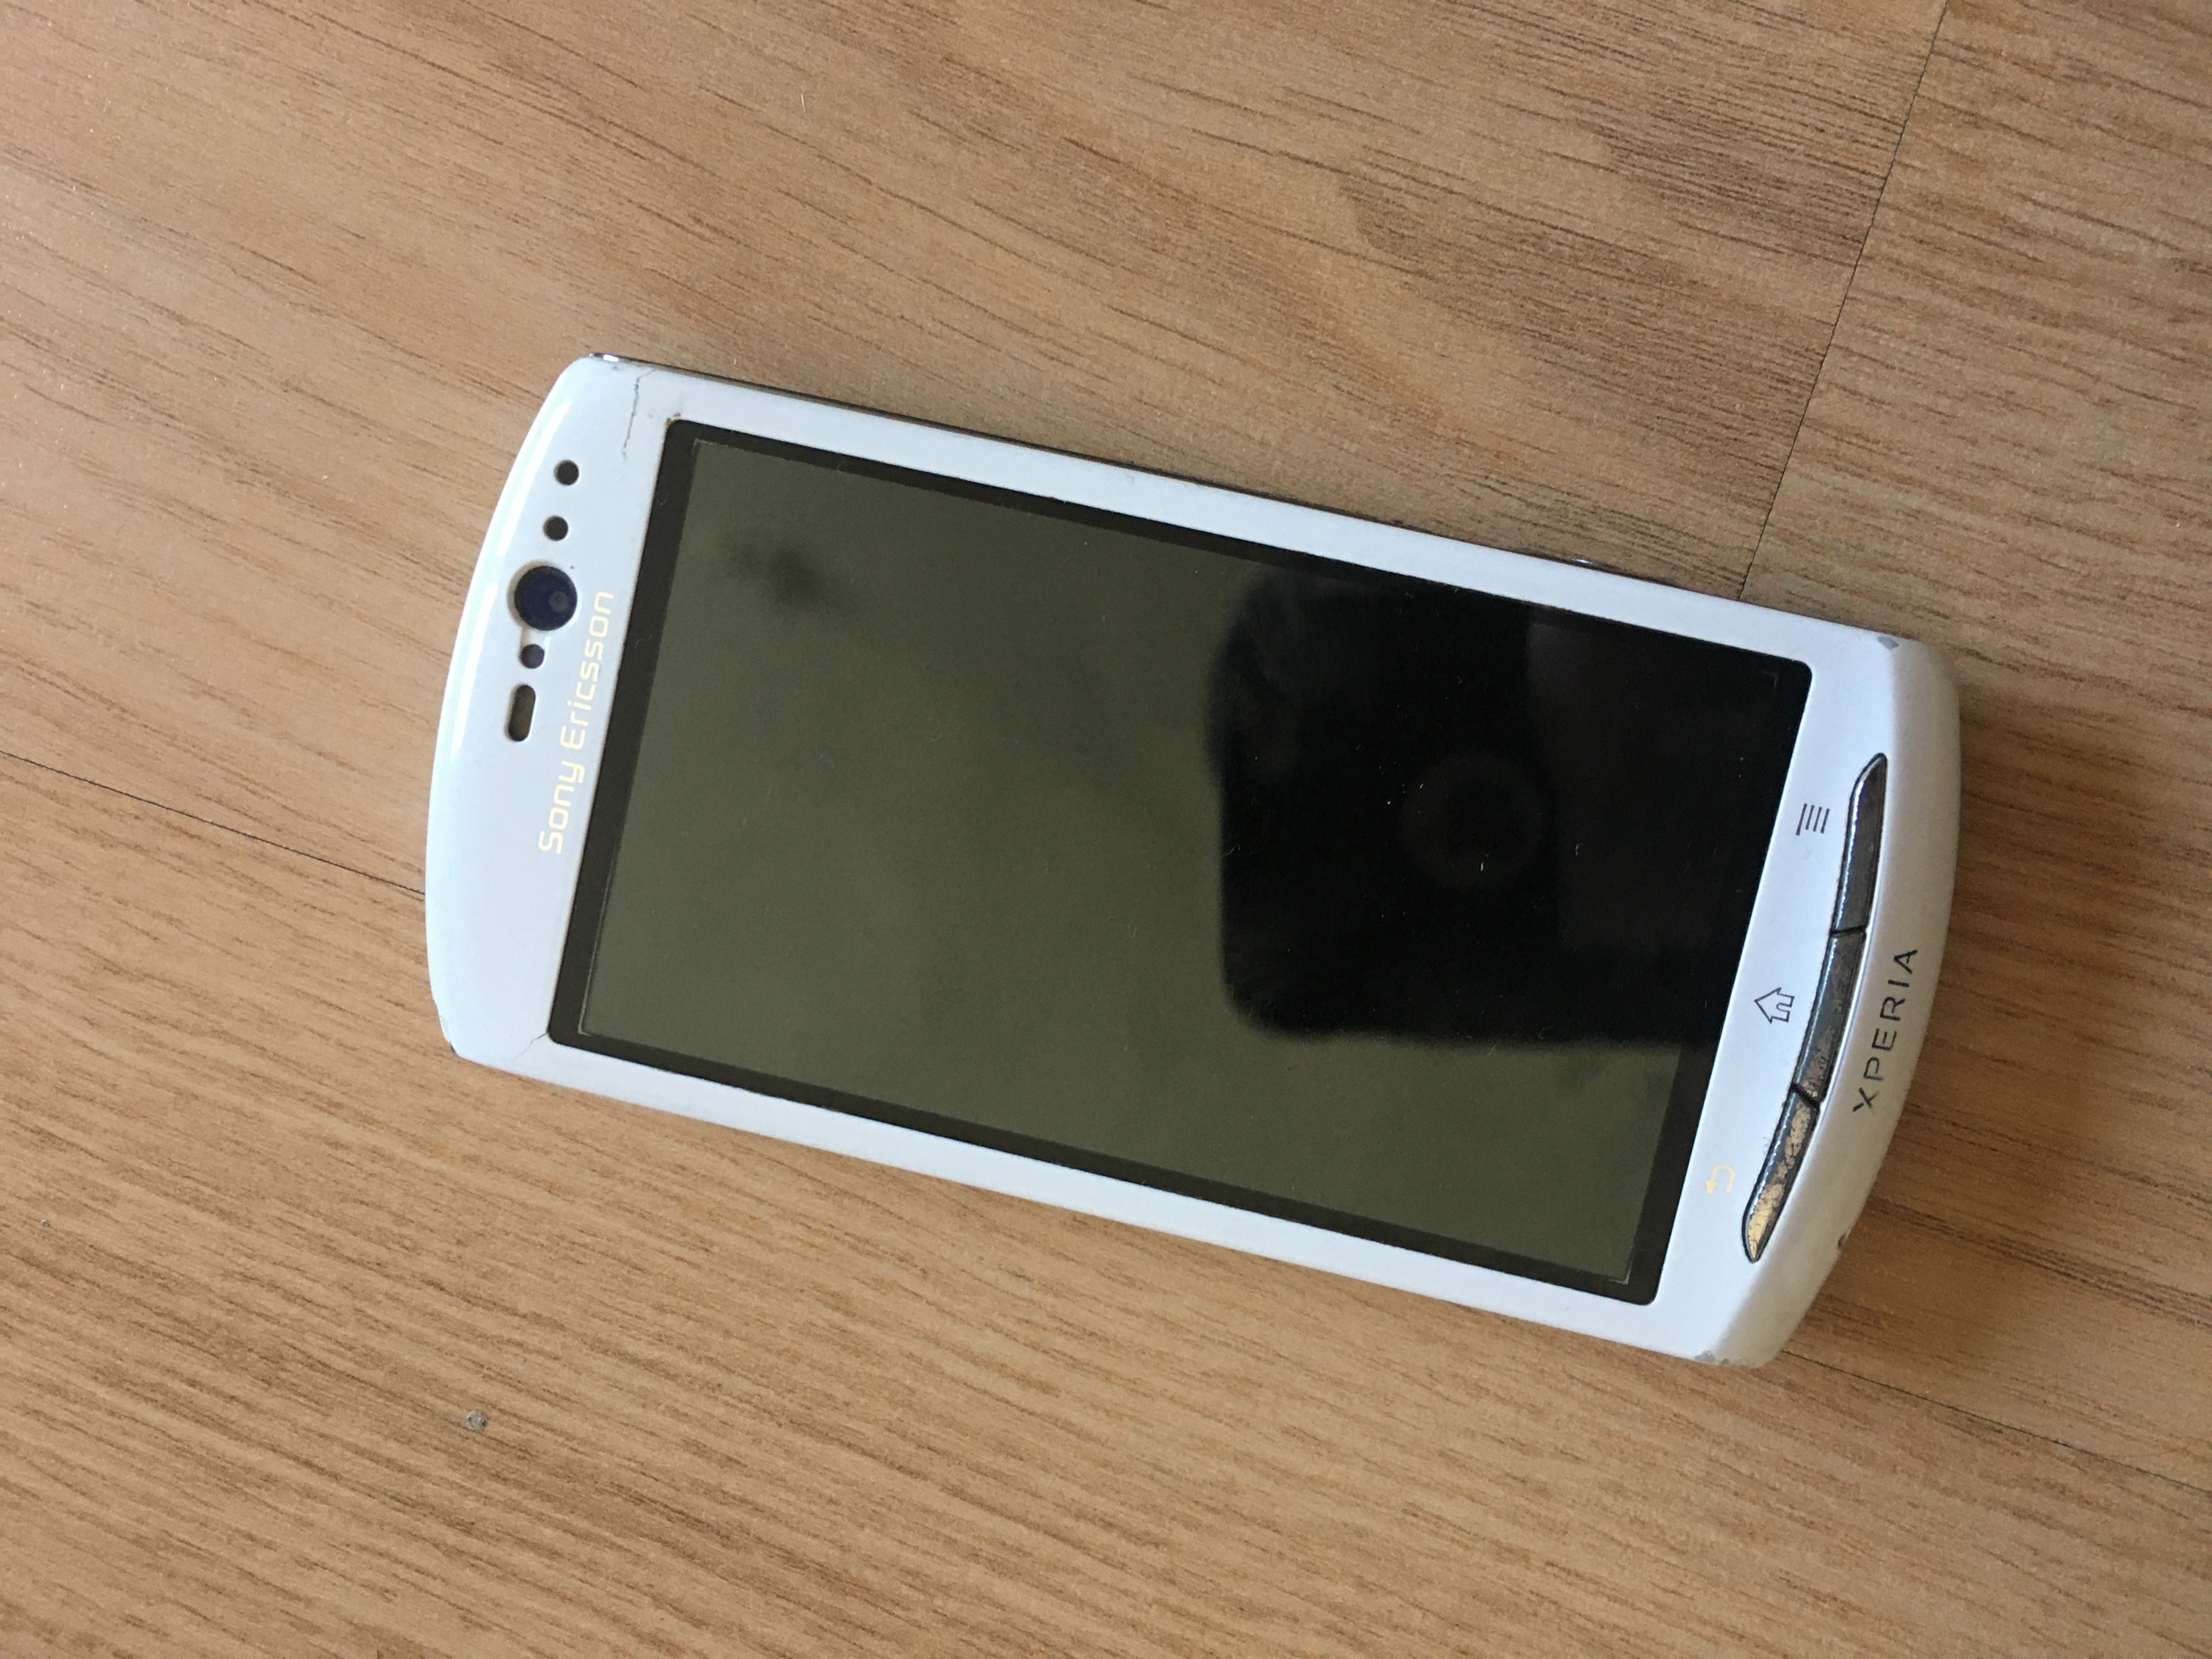 Sony XPeria Dokunmatik ve Tuşlu Telefon